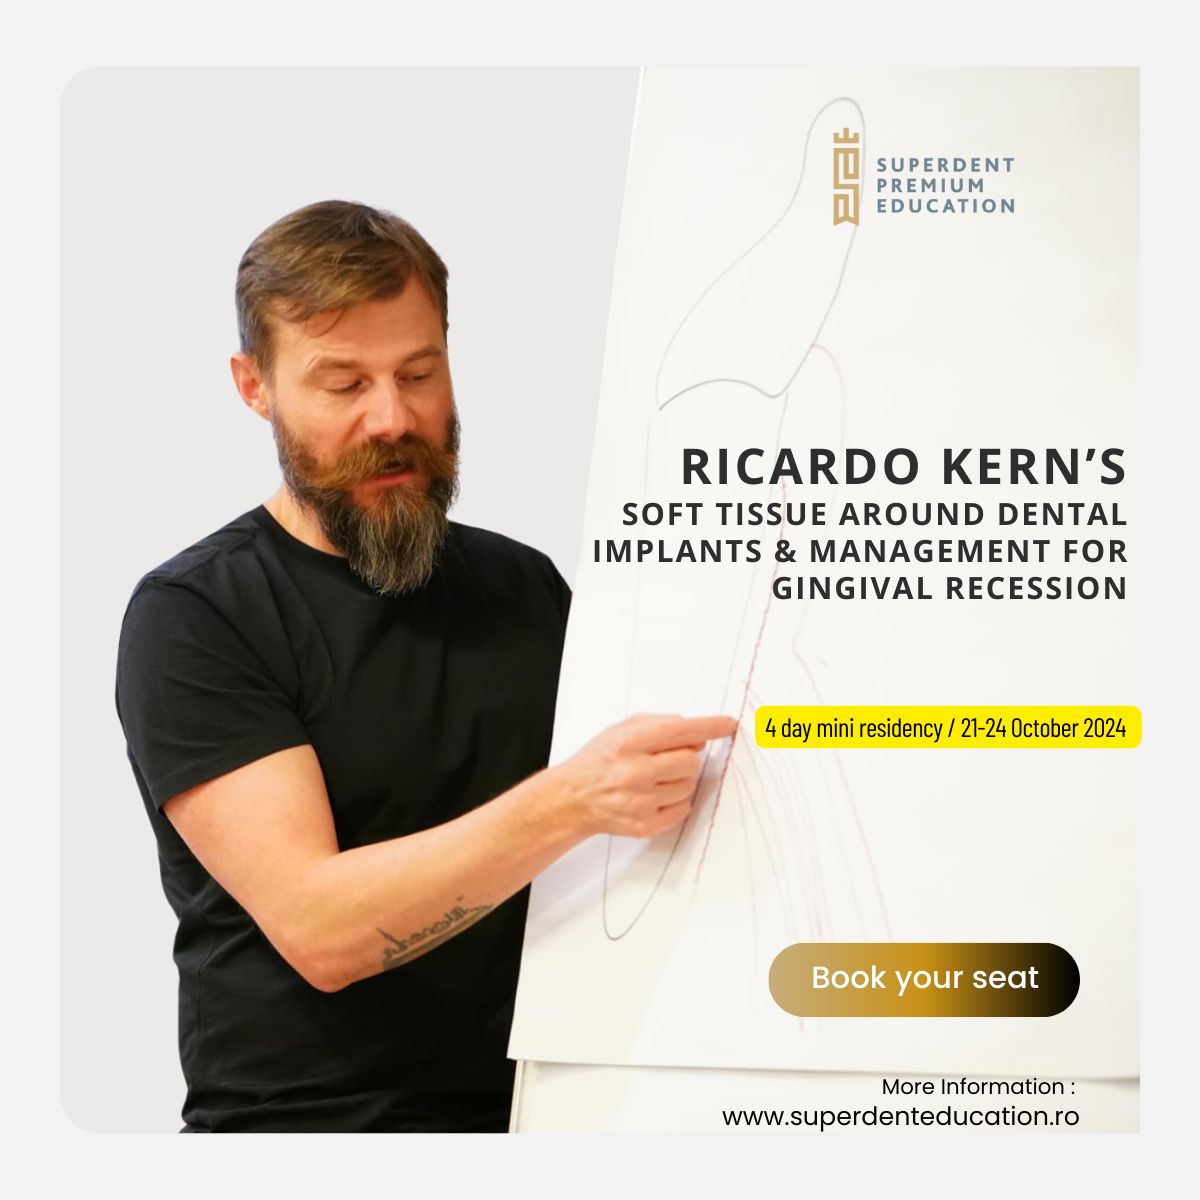 Ricardo Kern on soft tissue implants & teeth